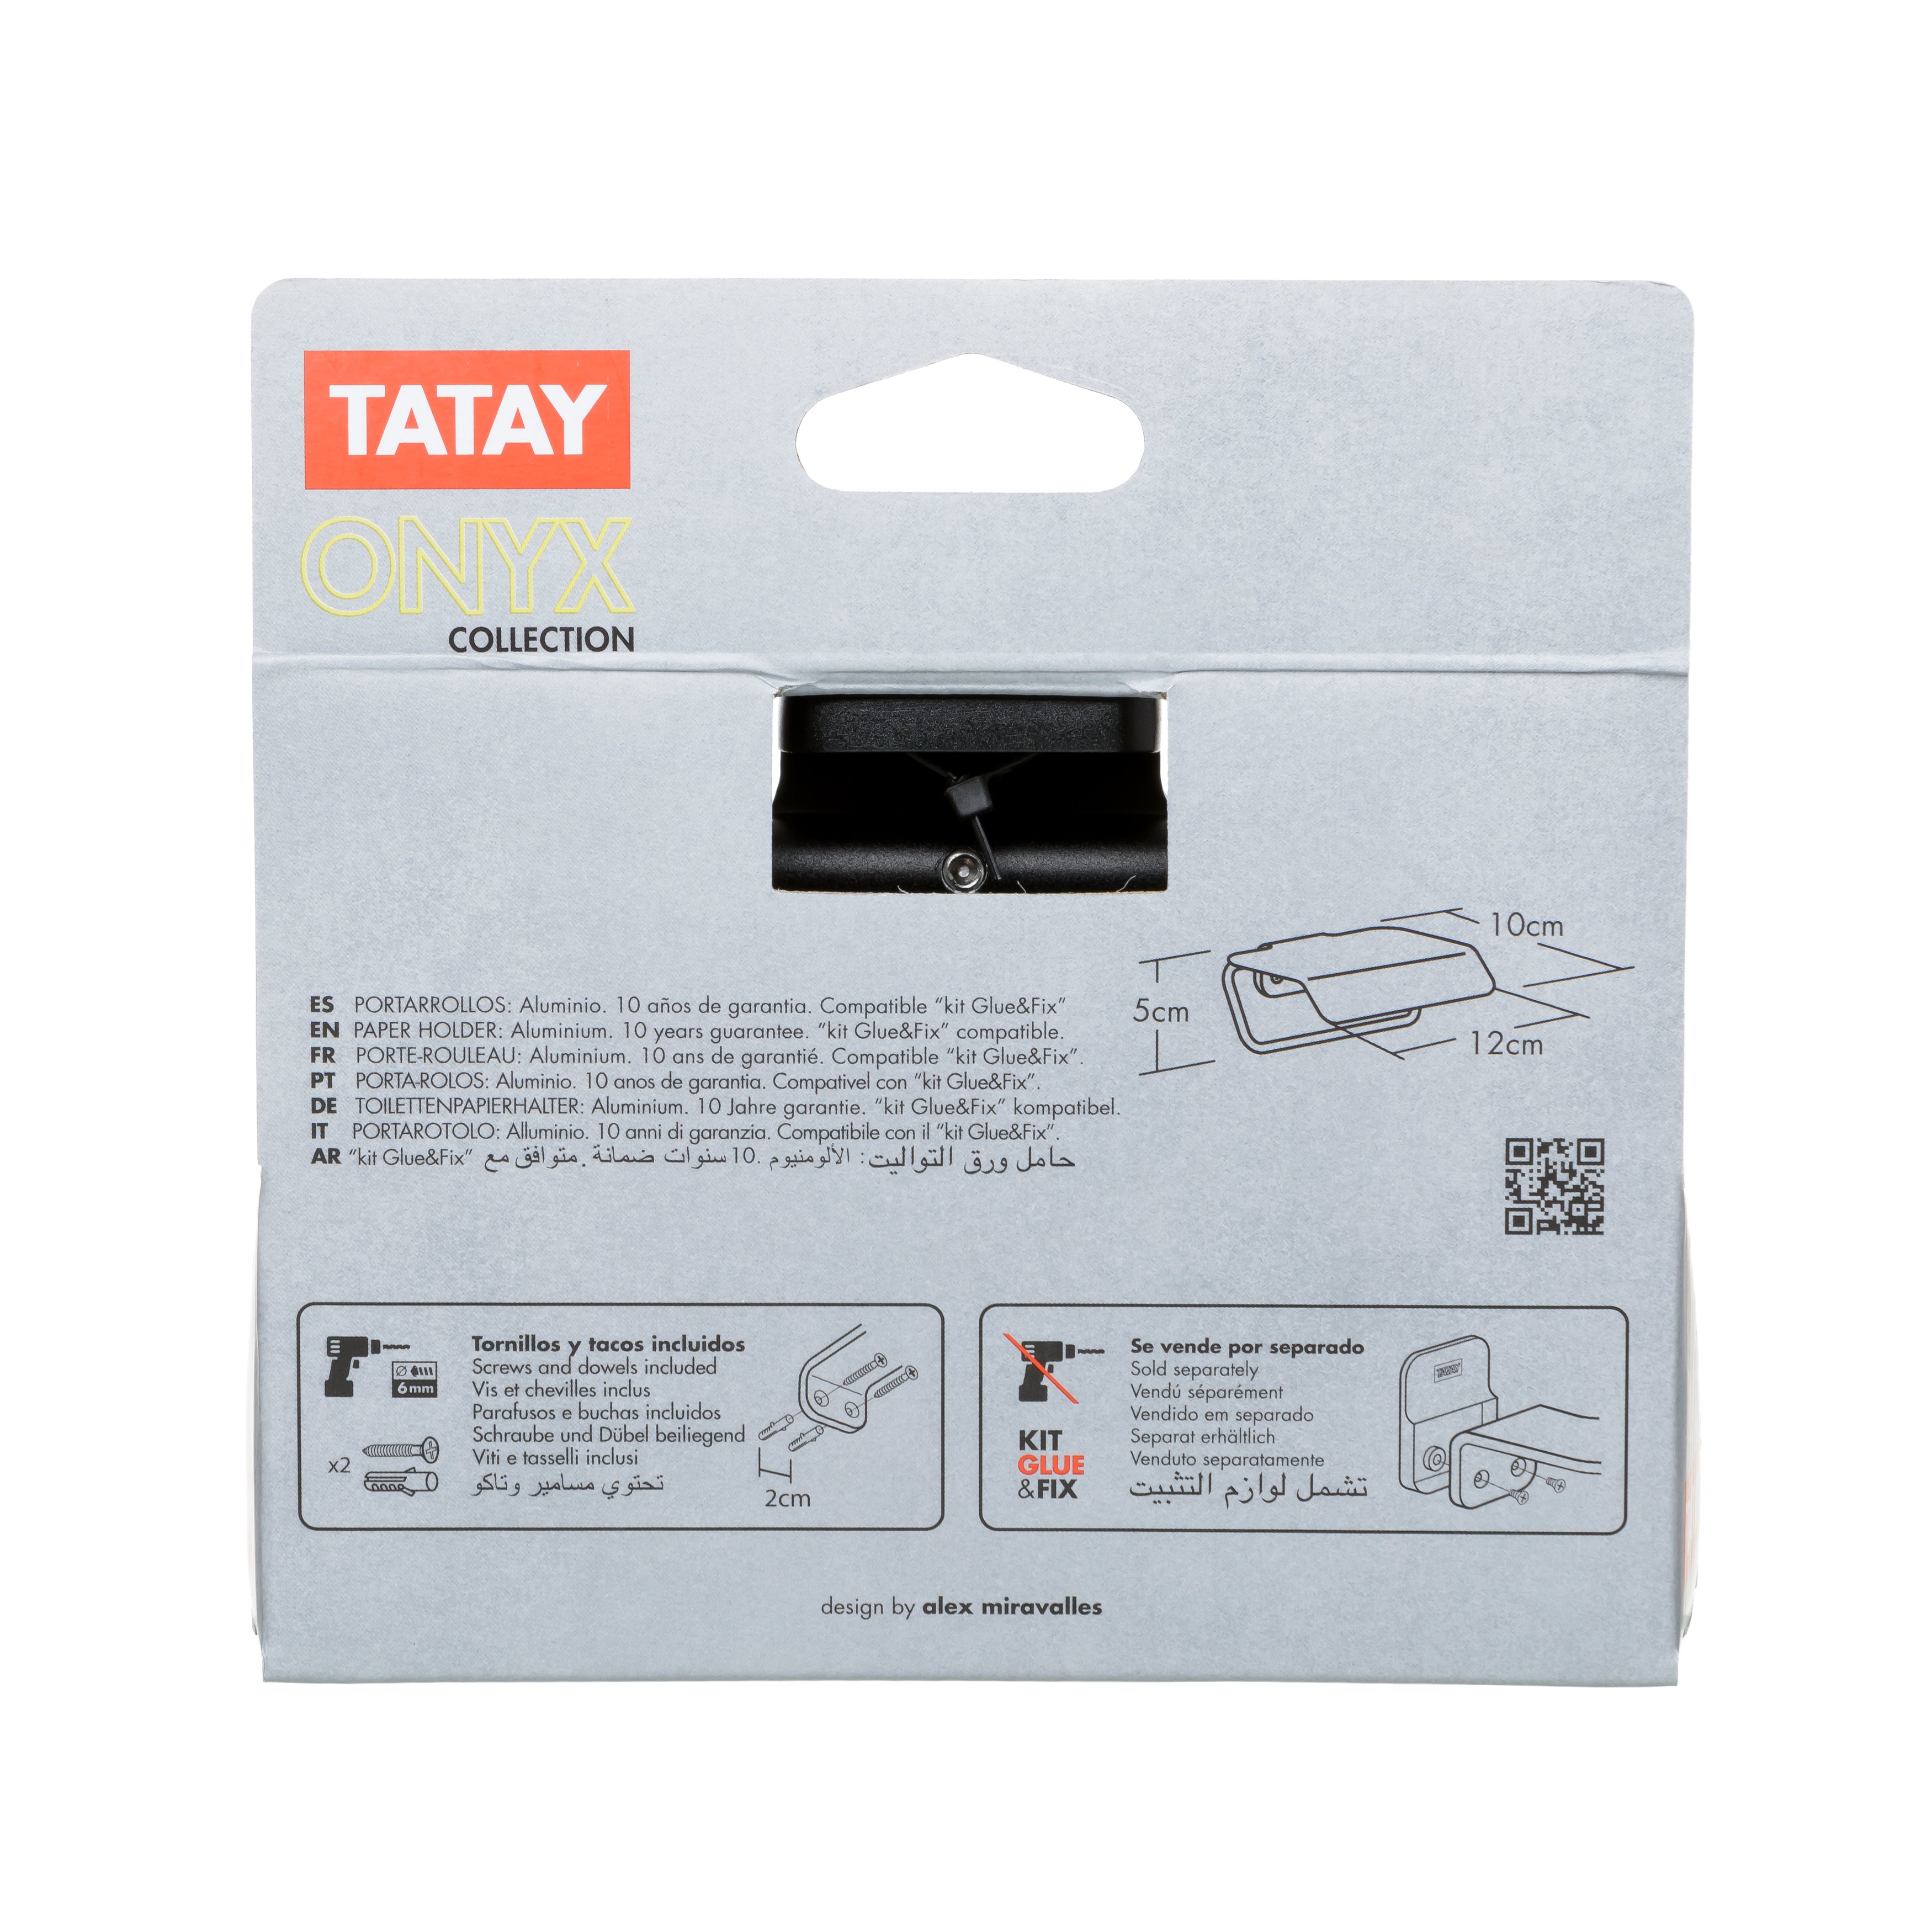 Tatay ONYX Toilettenpapierhalter Tatay